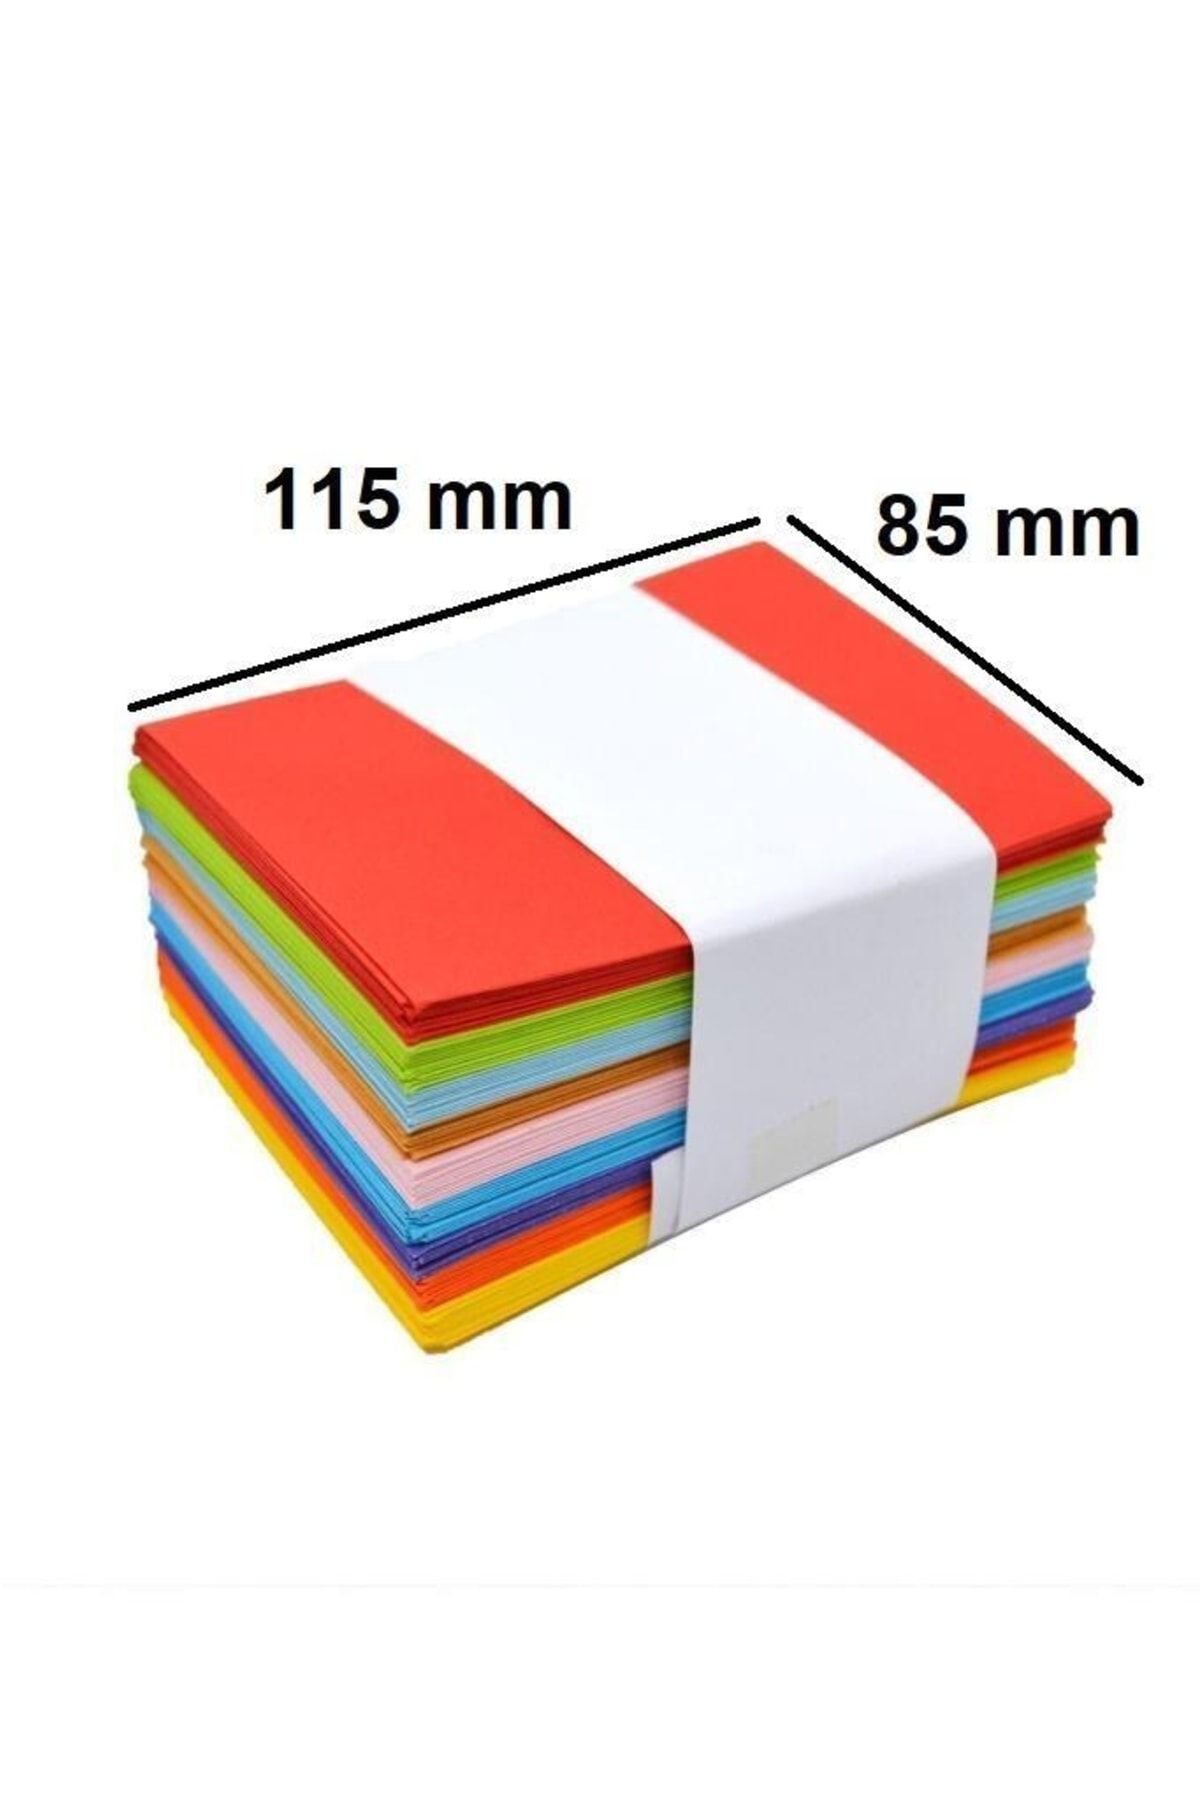 İstisna 100 Adet Midi Zarf 85mmx115mm 10 Renk Zarf Hediye Doğum Günü Dilekleri Zarfı